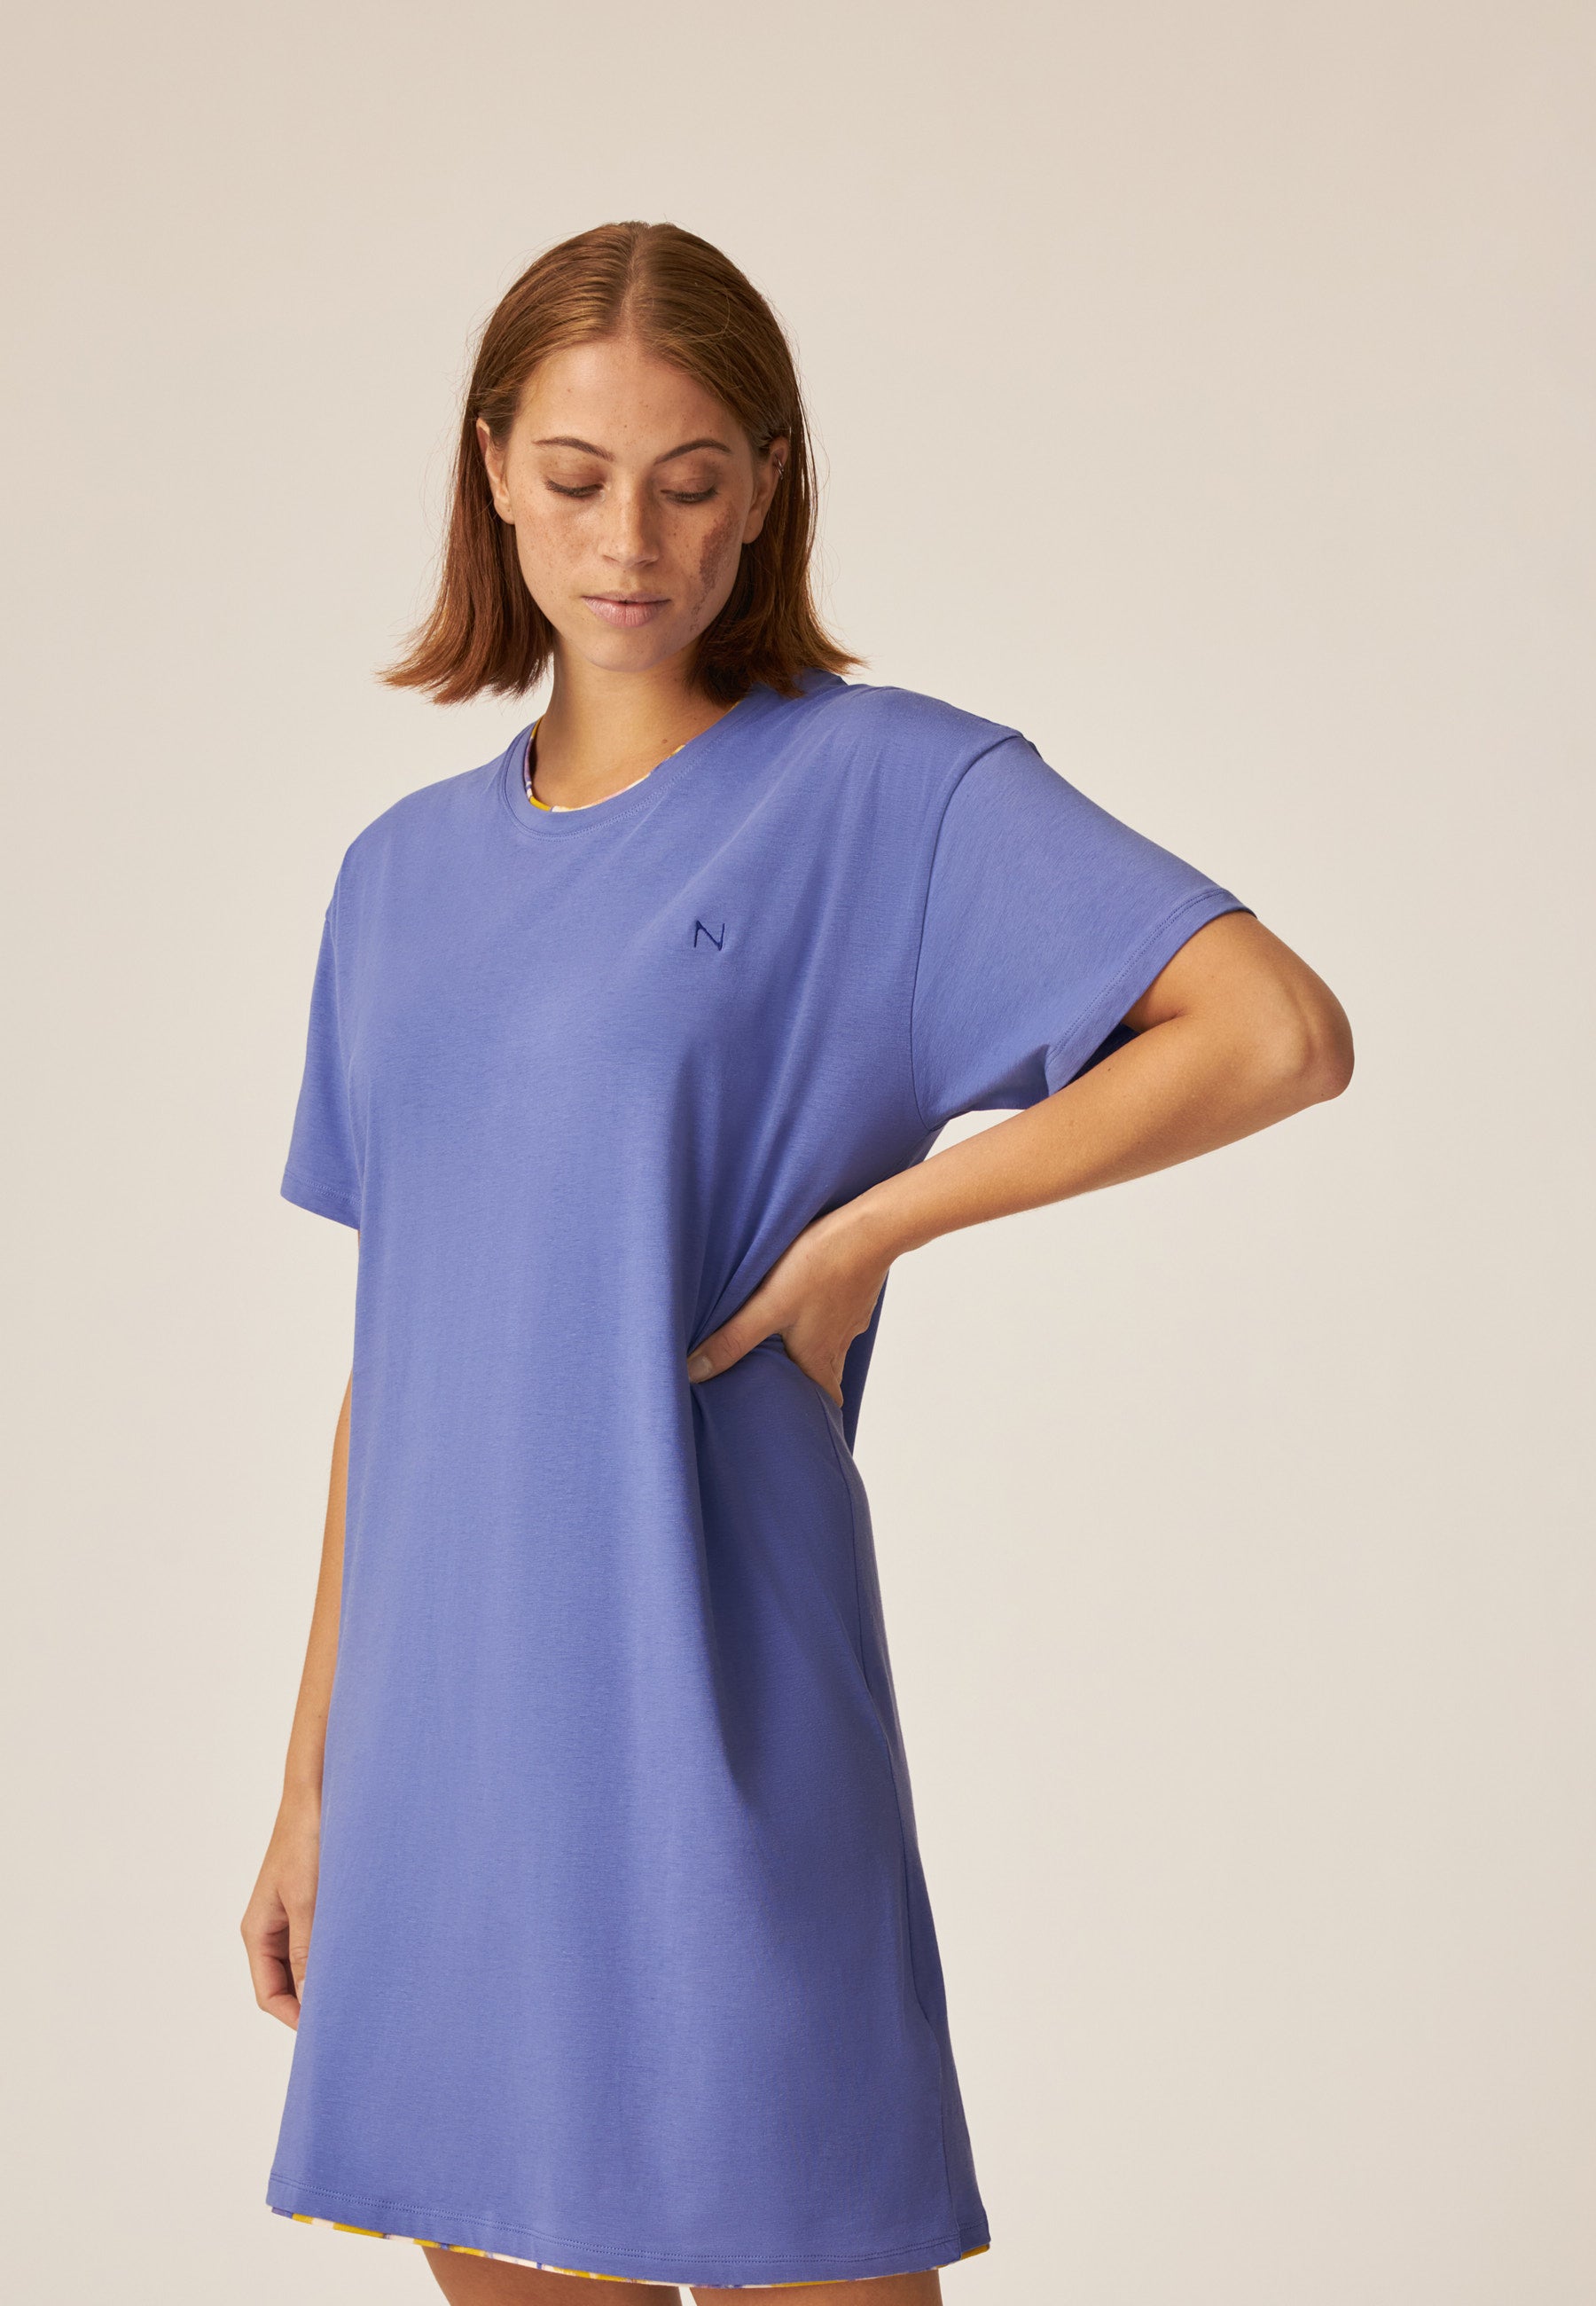 Bigshirt Short Sleeve - Cotton Candy - Peaceful Blue